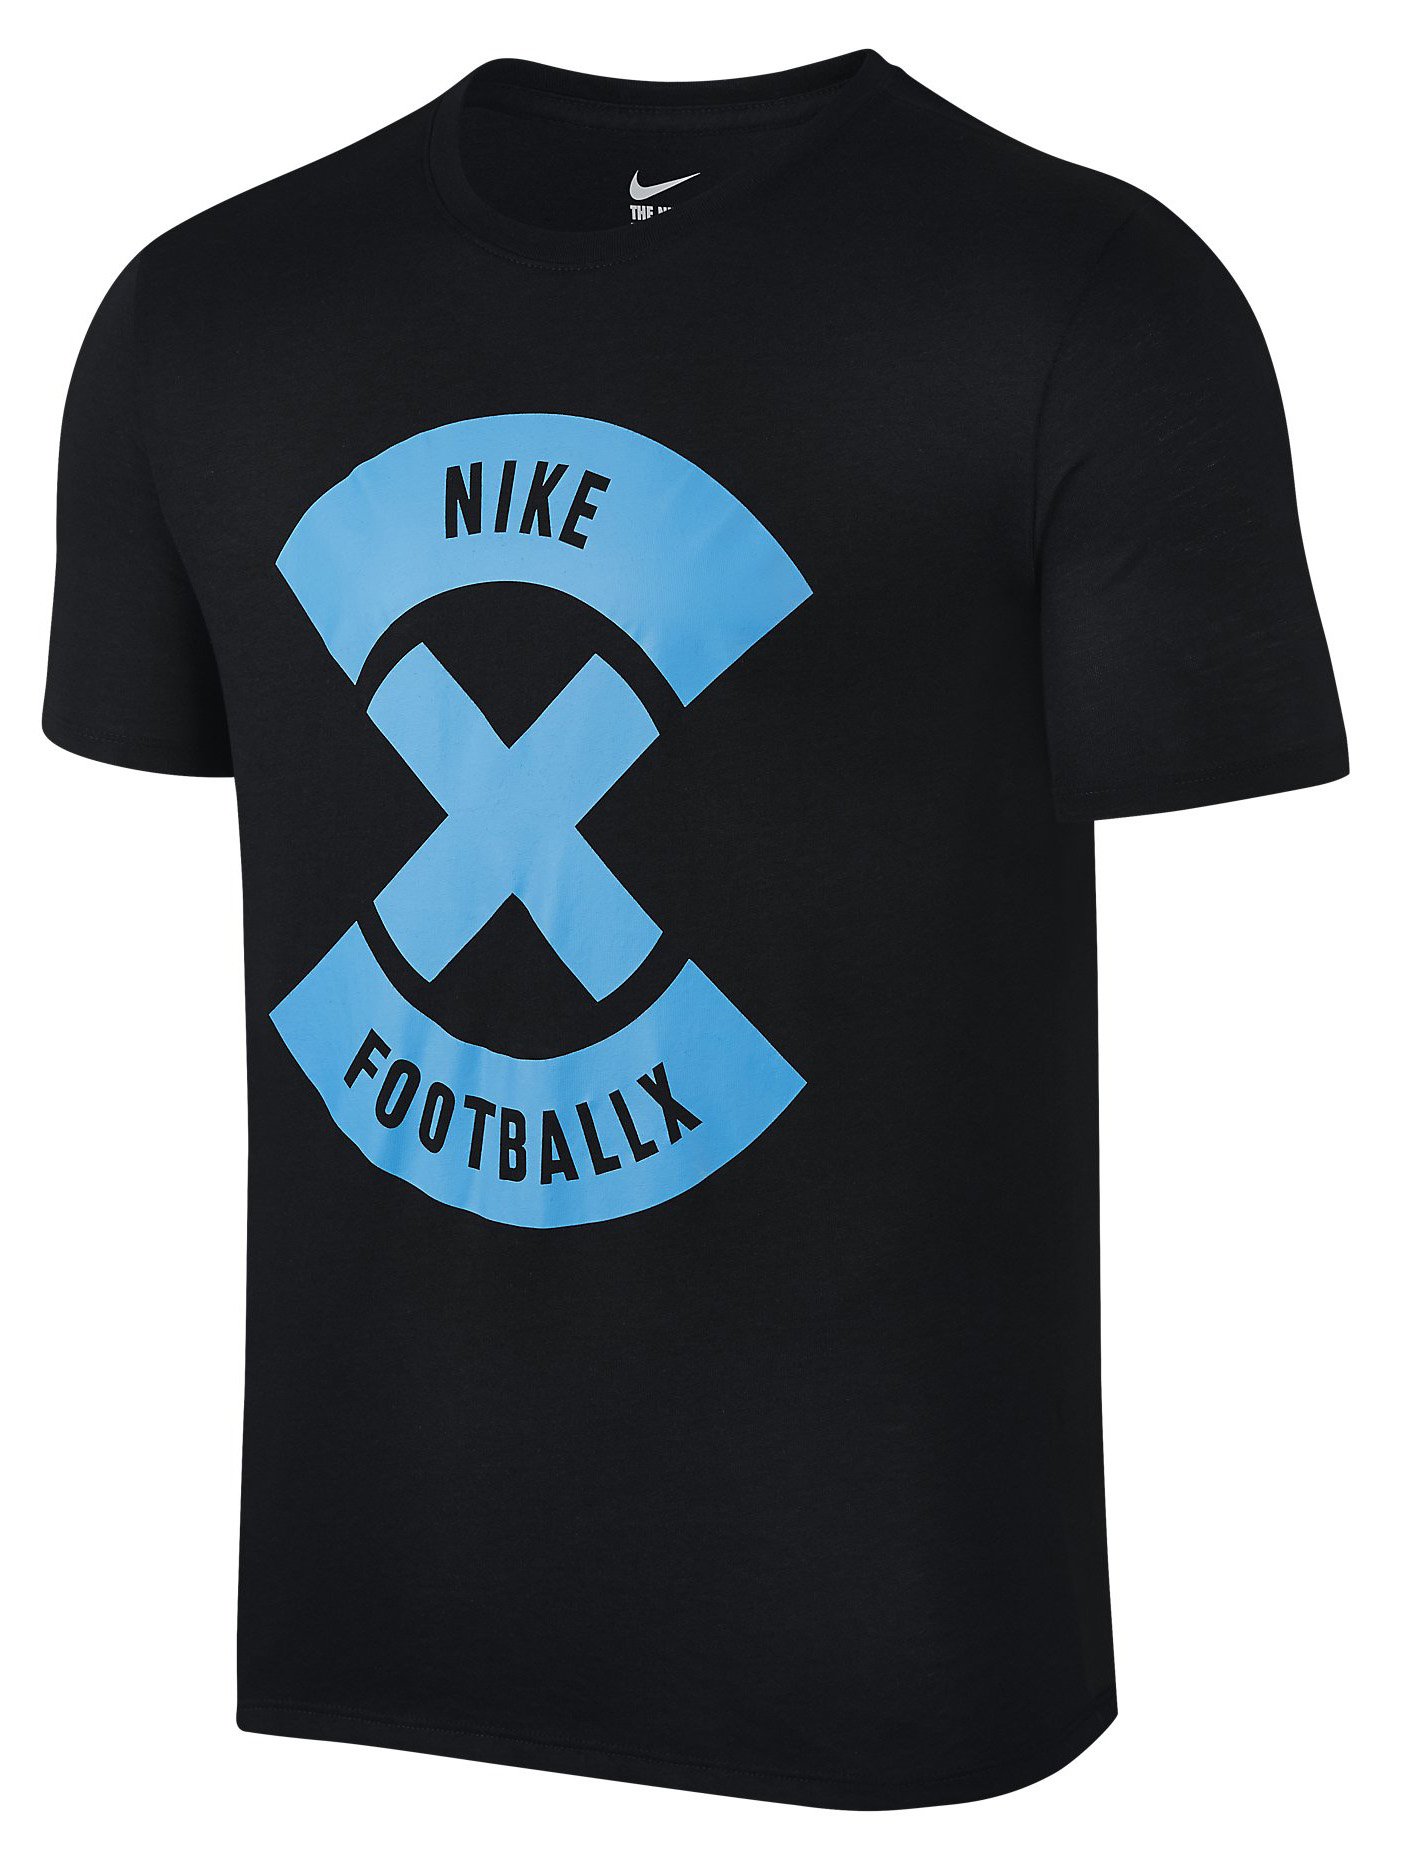 Tee-shirt Nike FOOTBALL X GLOW